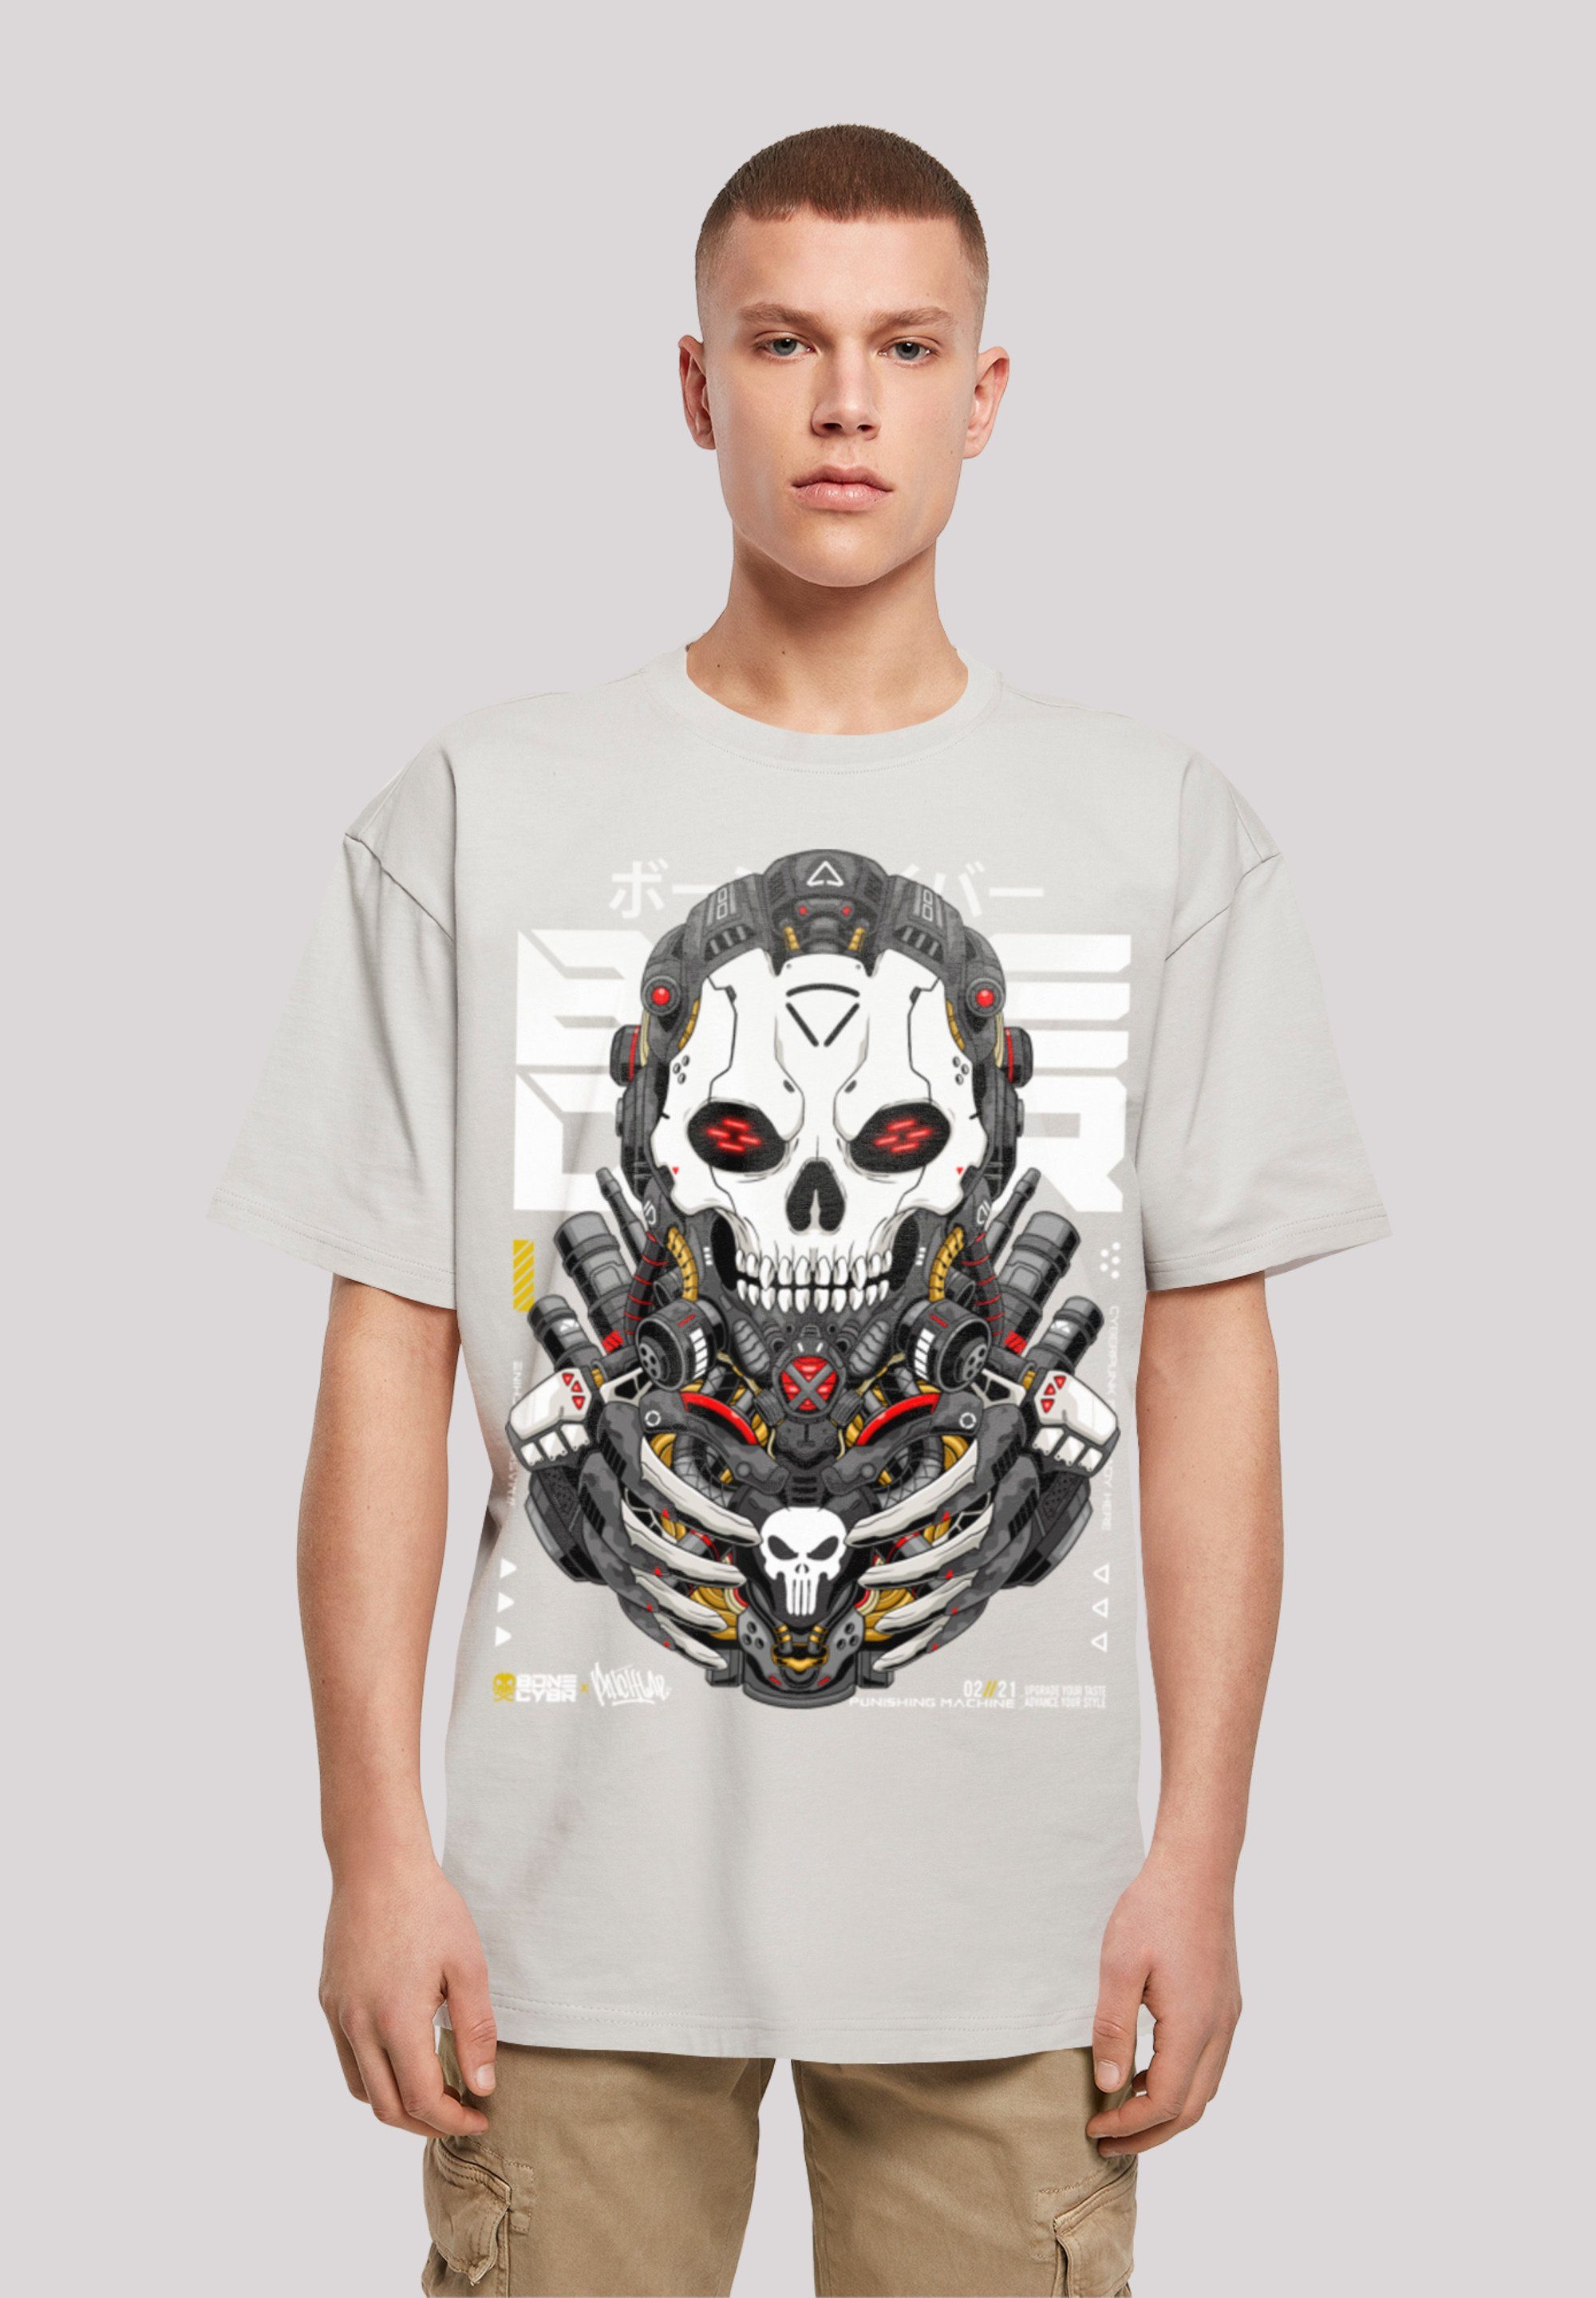 T-Shirt Punishing Machine Bone Cyber CYBERPUNK lightasphalt STYLES F4NT4STIC Print